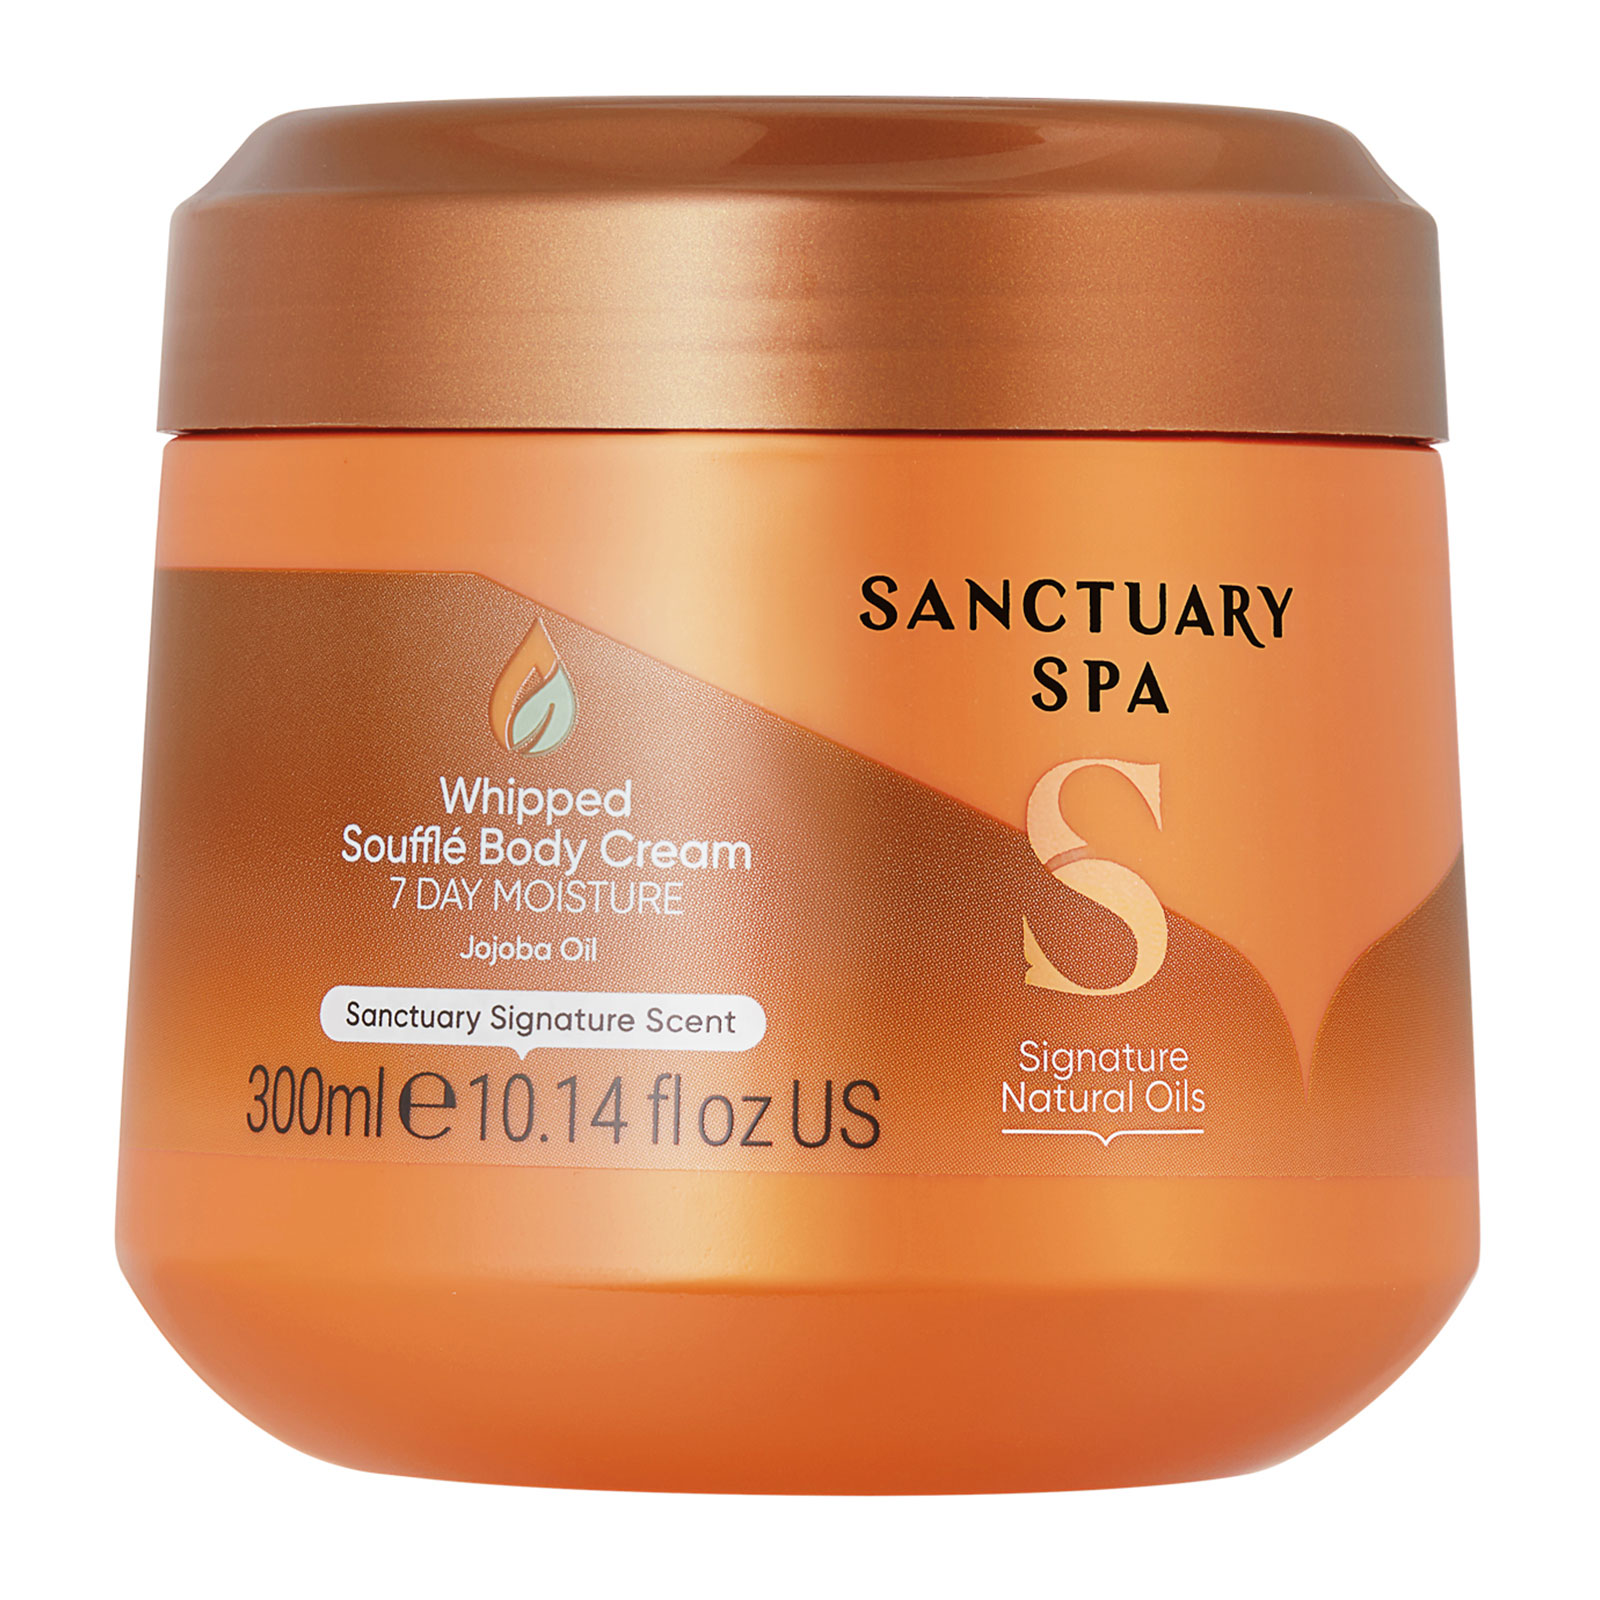 Sanctuary Spa Signature Natural Oils Whipped Souffl� Body Cream 300ml